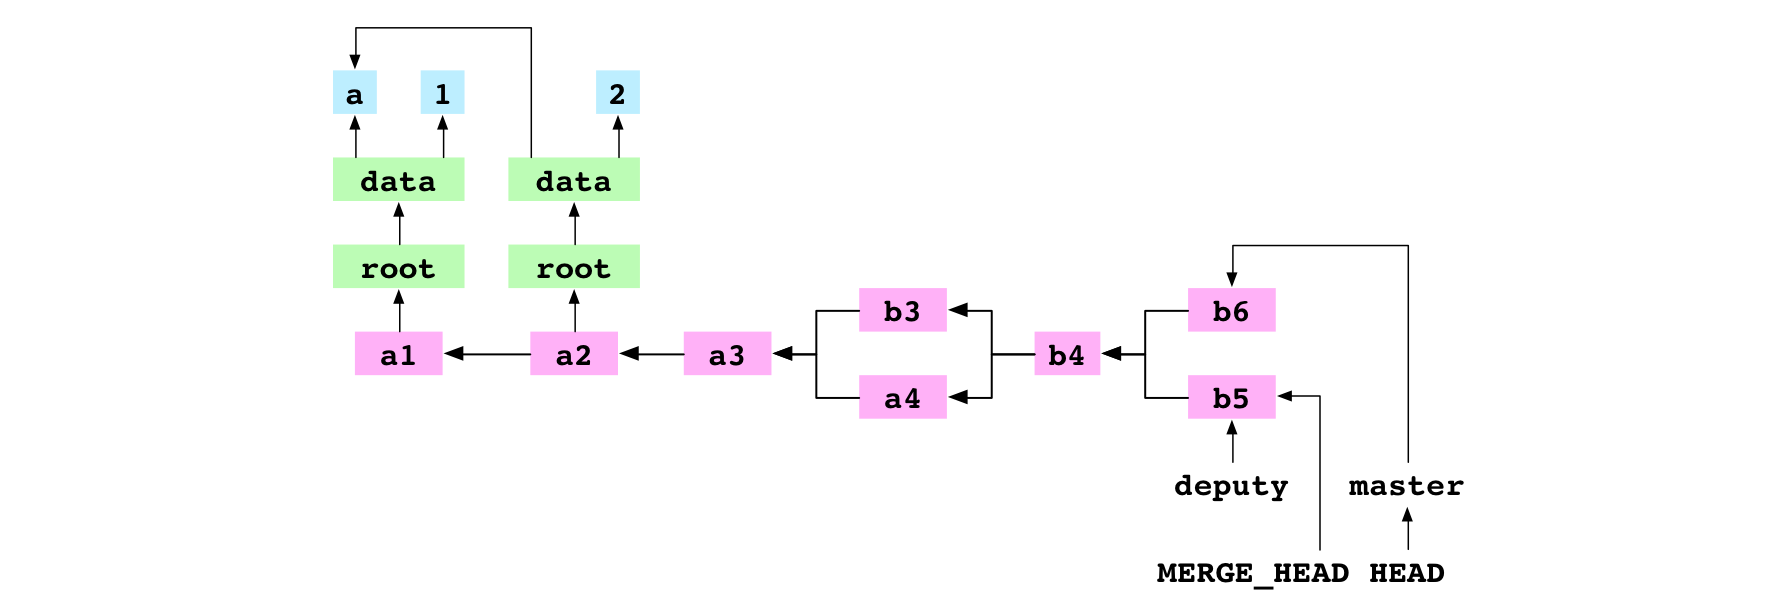 MERGE_HEAD written during merge of b5 into b6